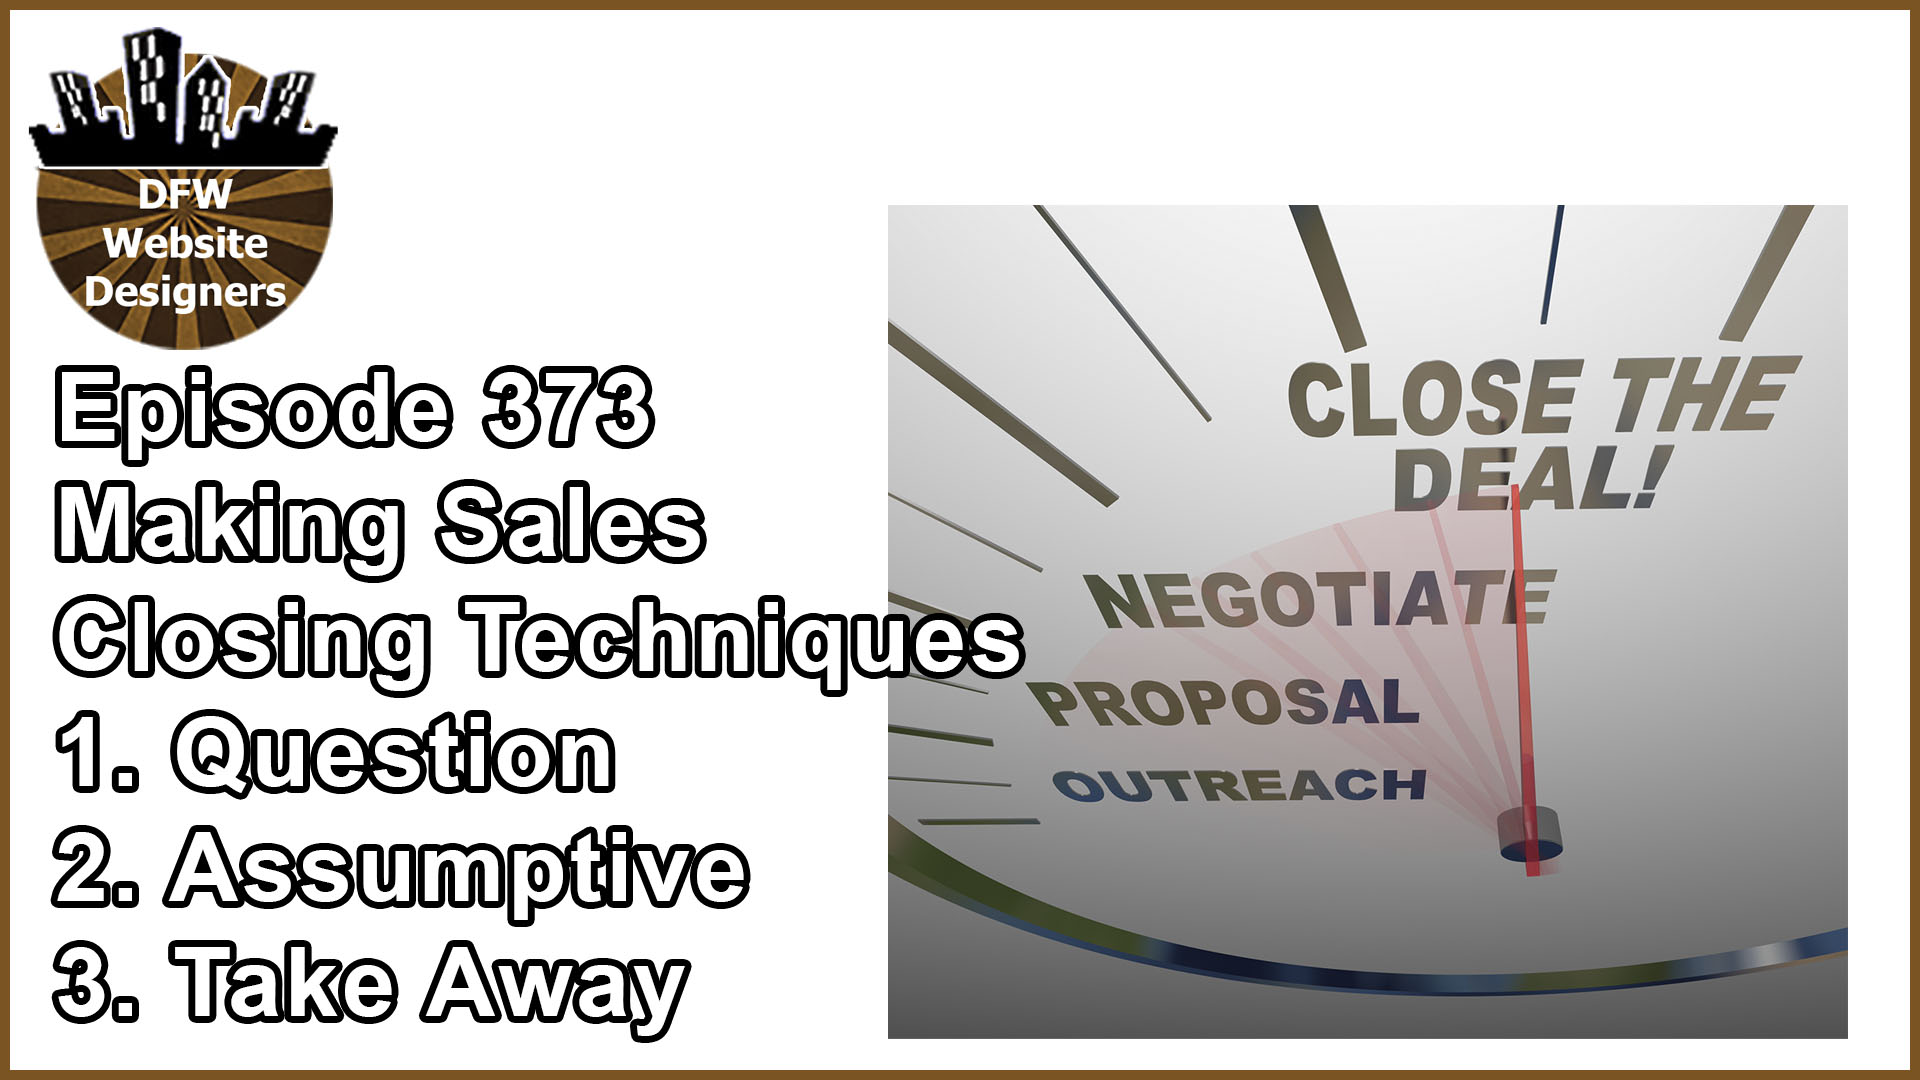 Episode 373 Making Sales Pt6 Closing Techniques: Questions, Assumptive, Take Away Close